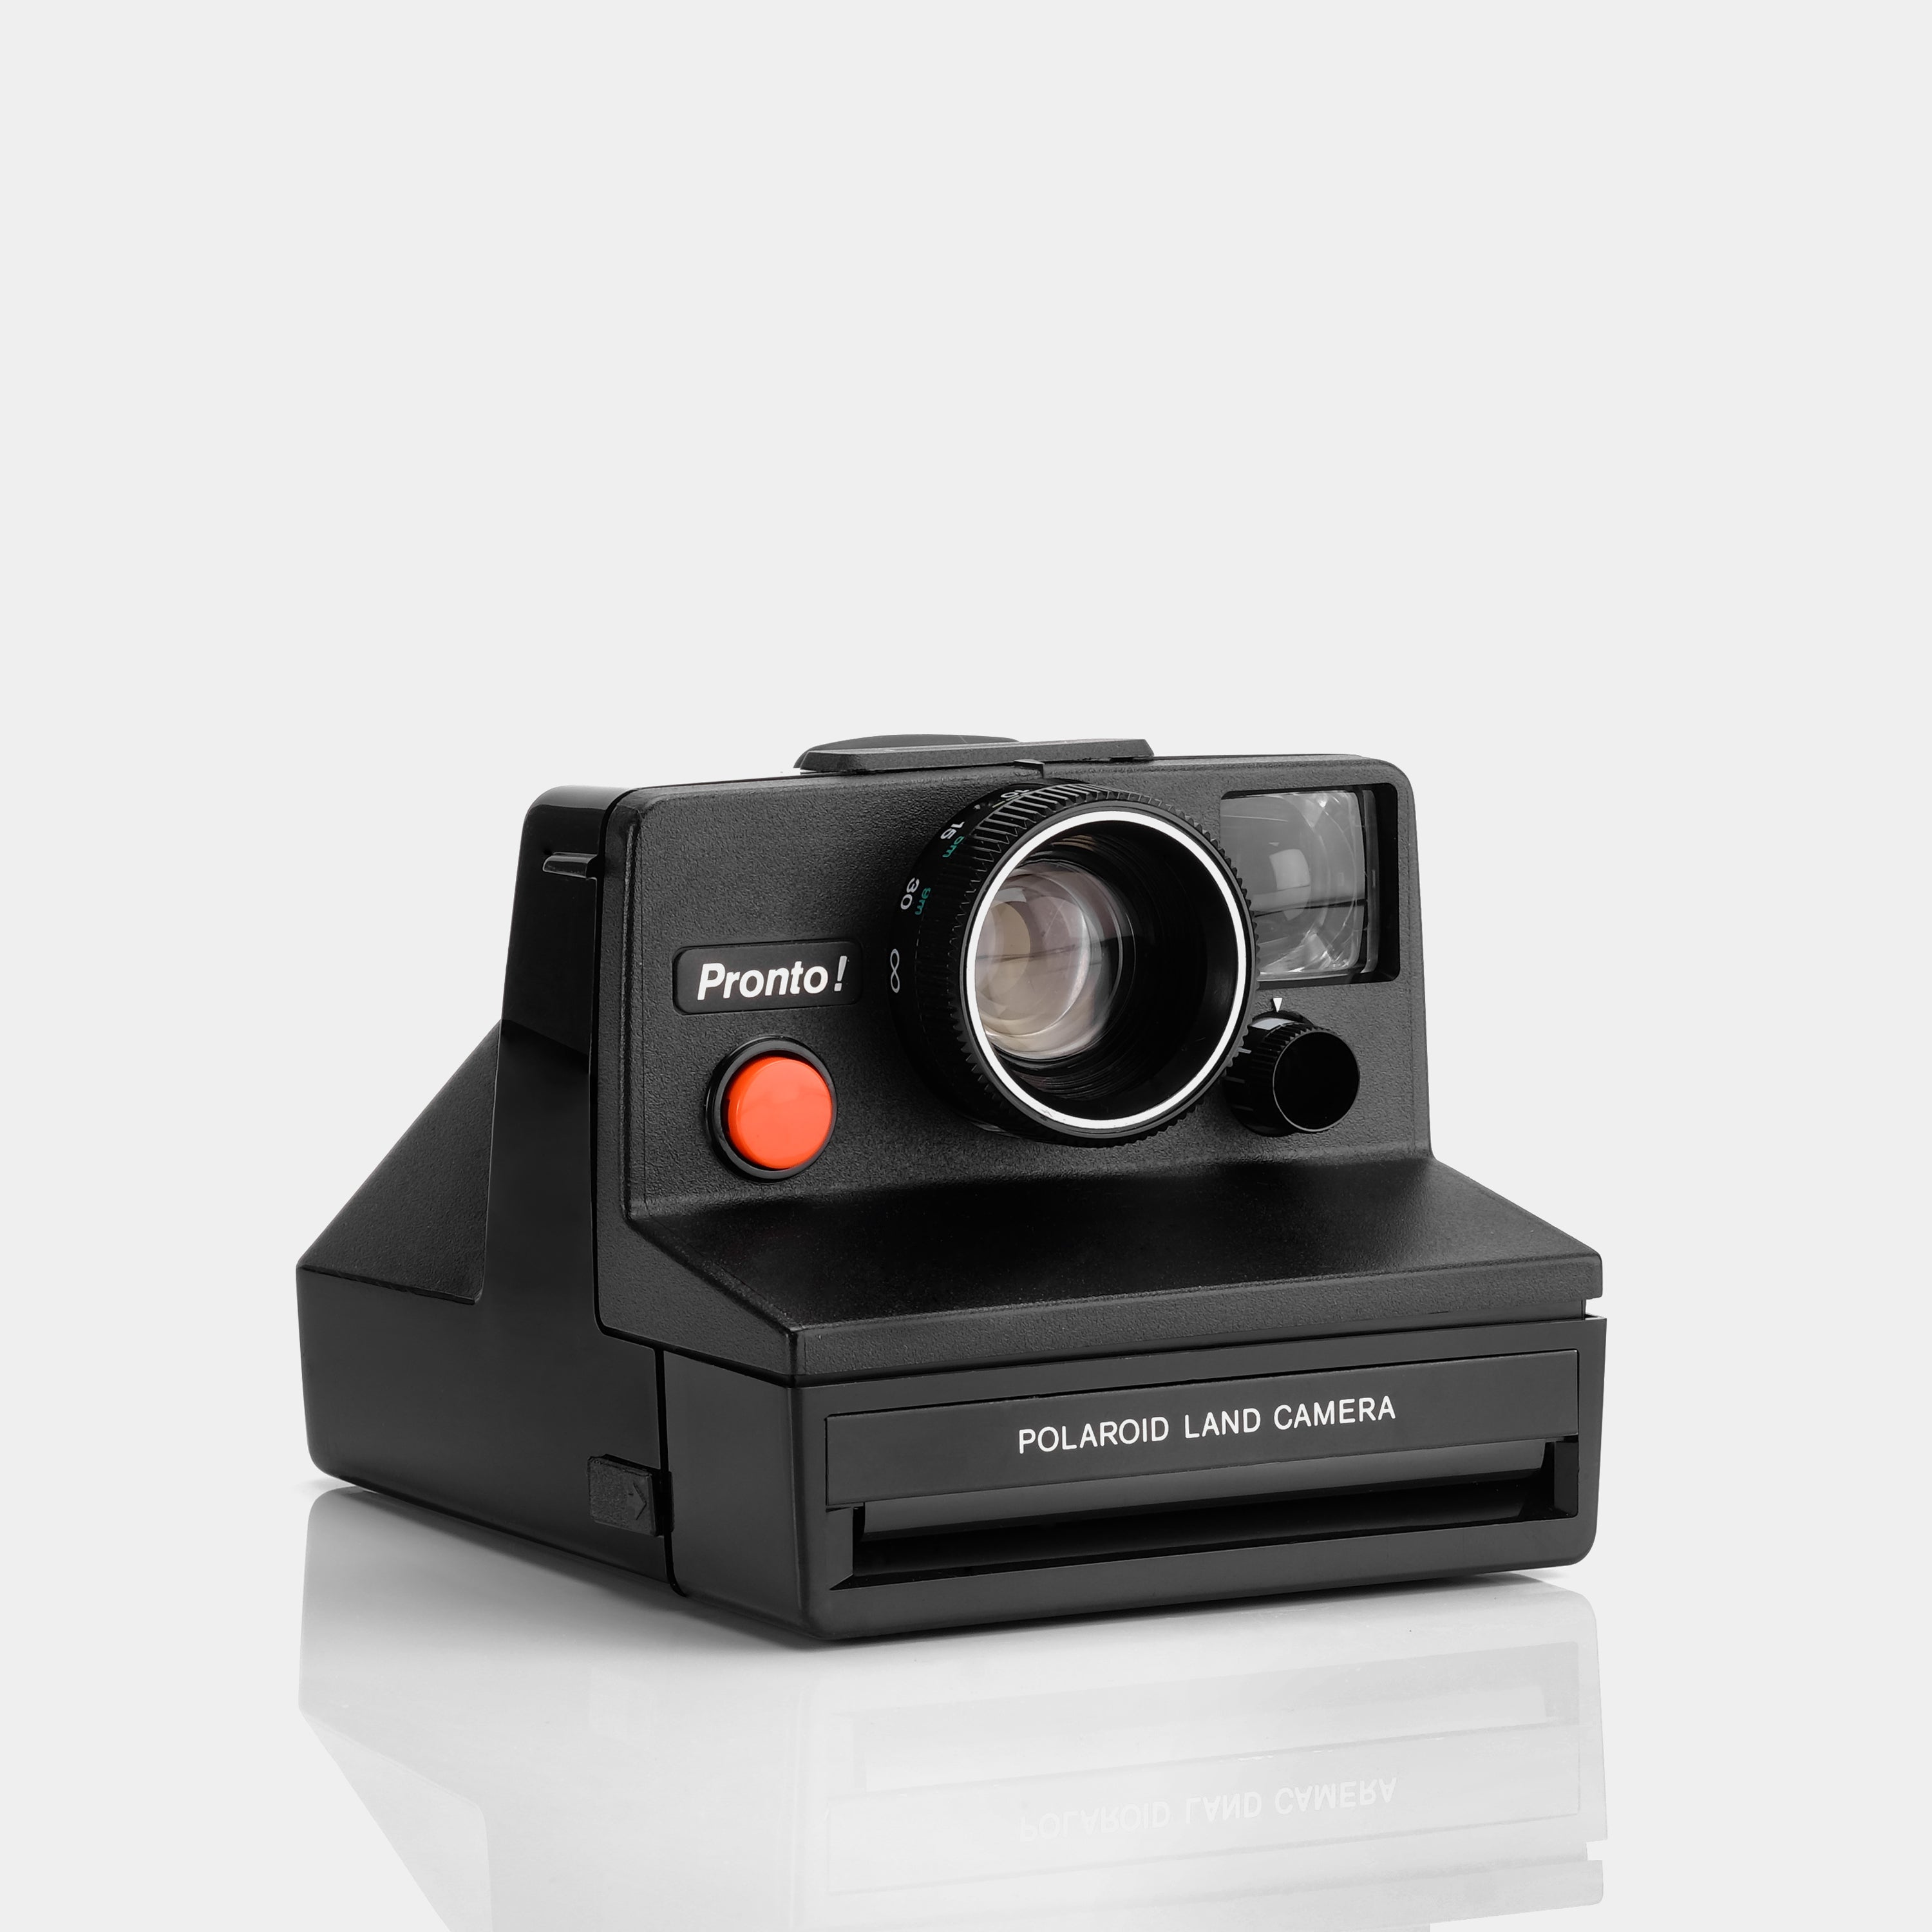 Polaroid SX-70 Pronto! Instant Film Camera